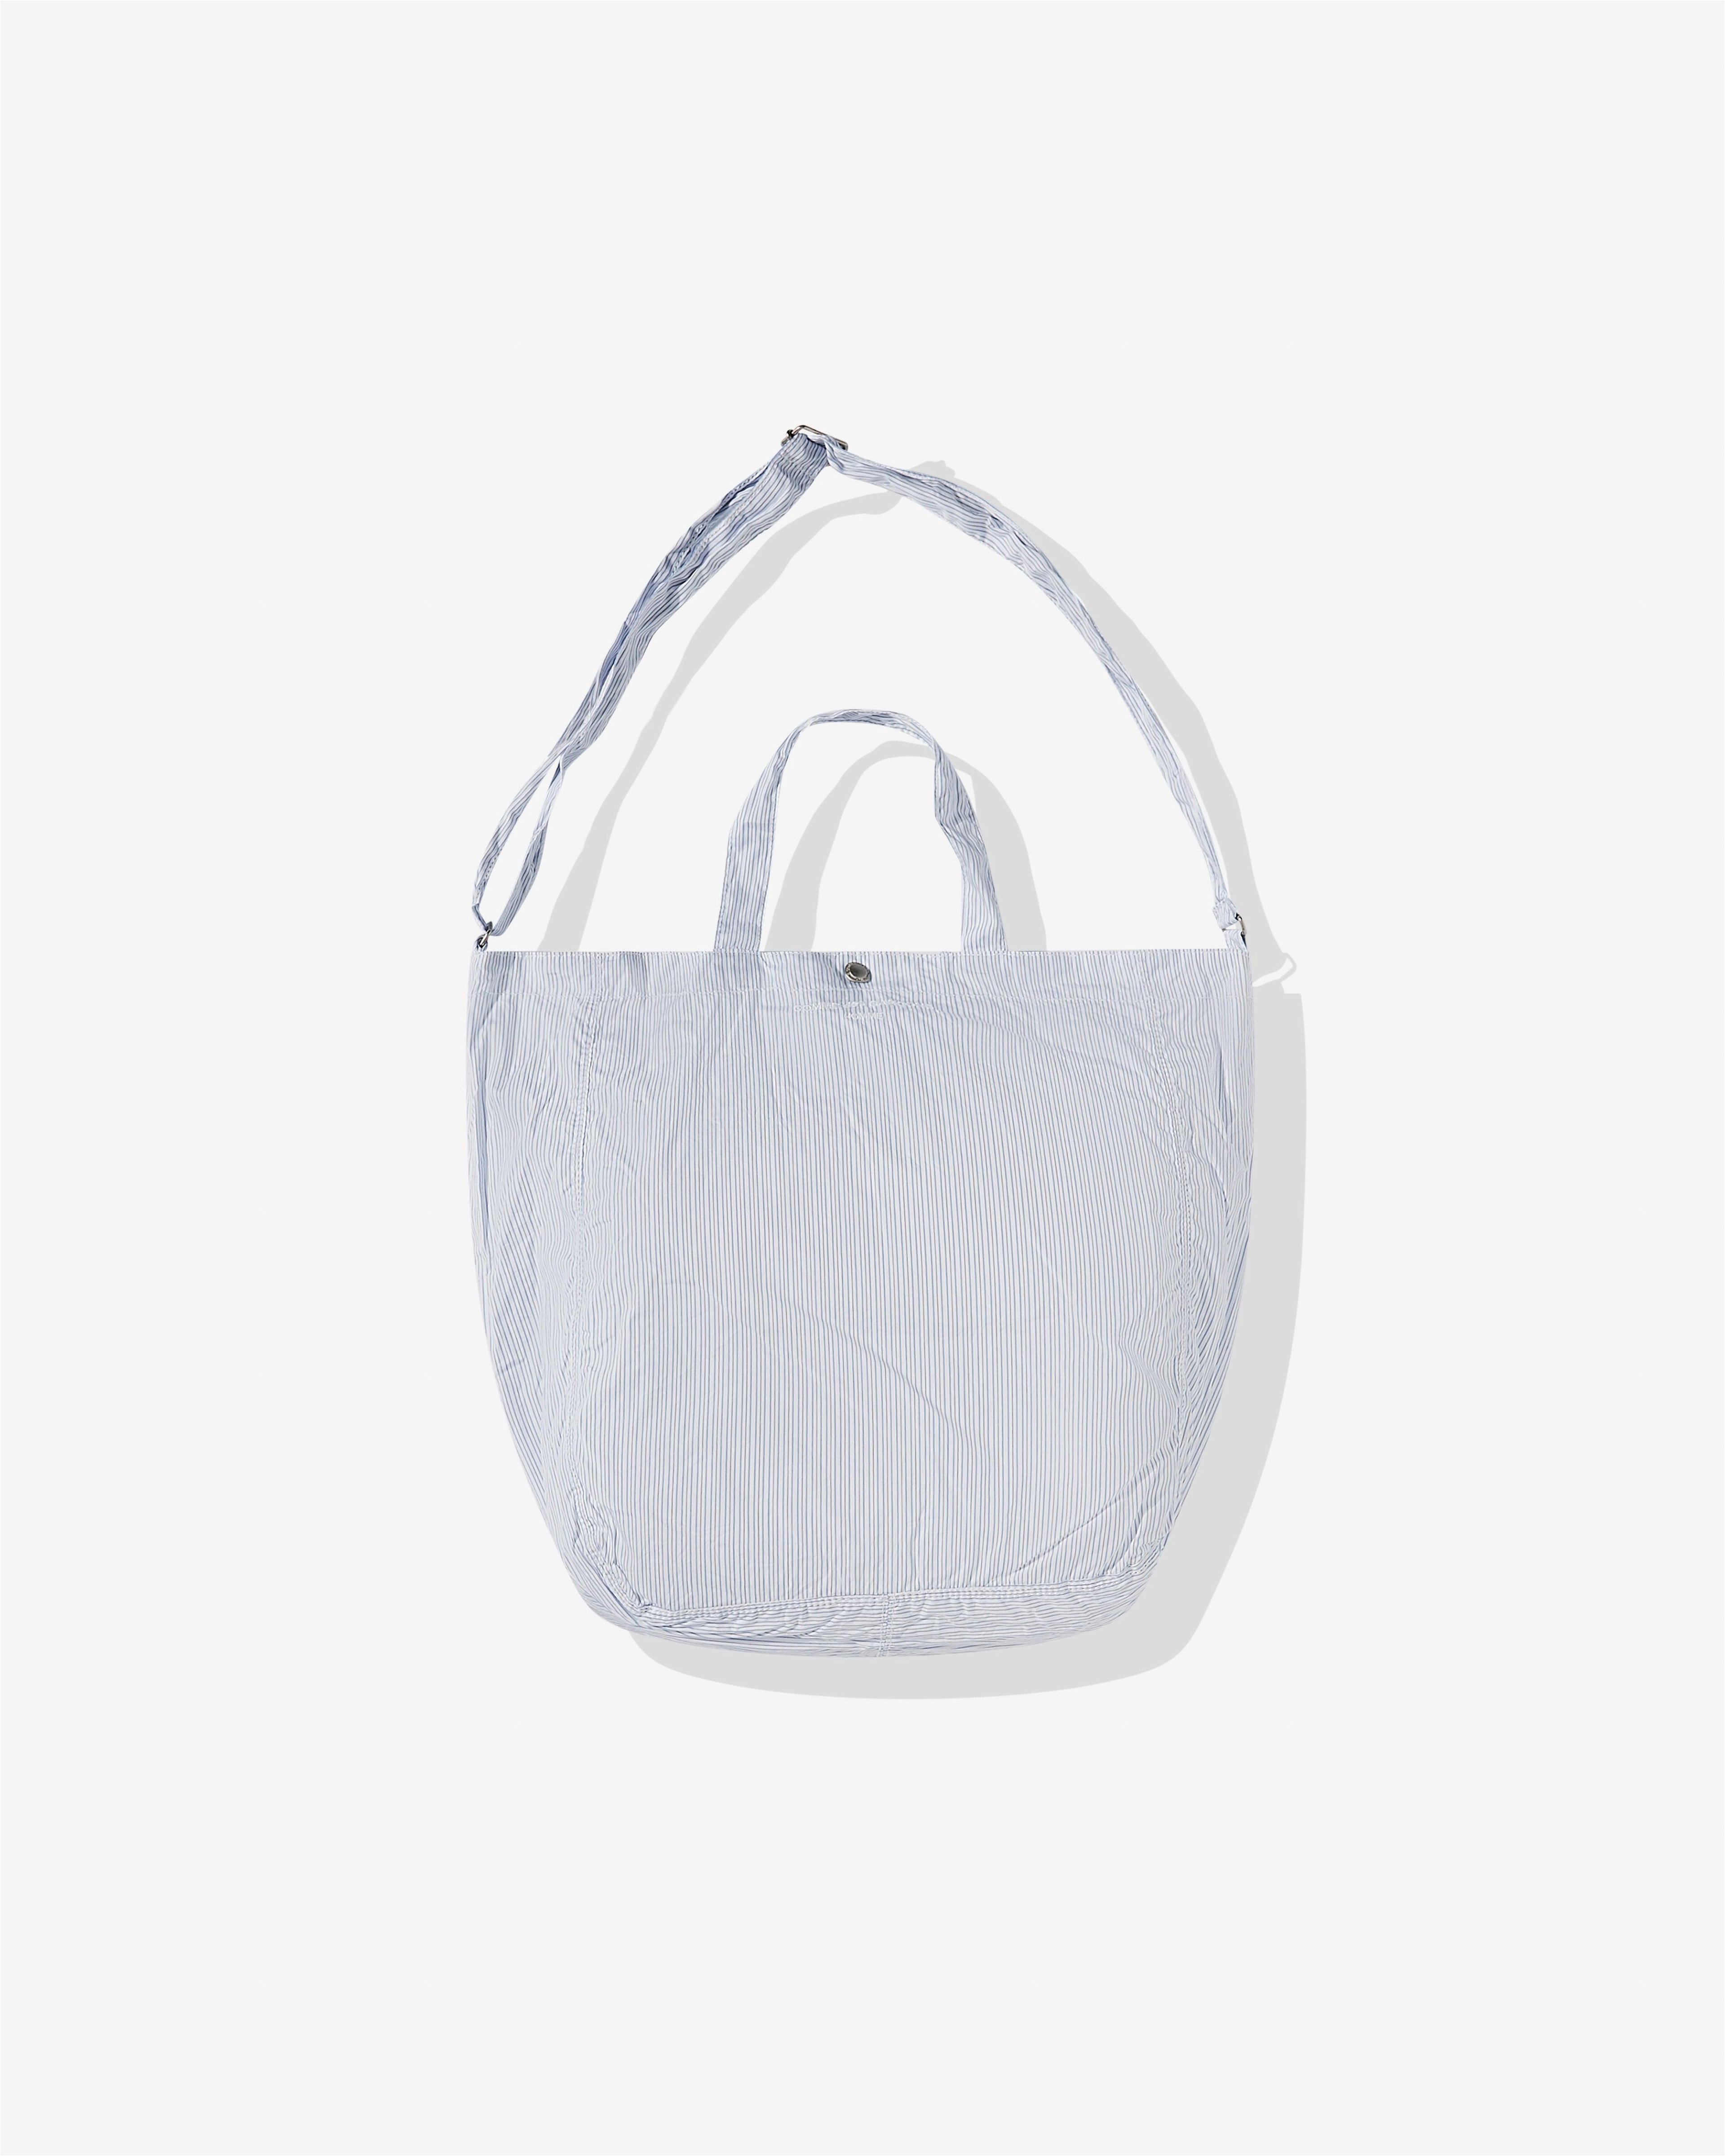 Comme des Garçons Homme - Cotton Tote Bag - (White/Blue) by CDG HOMME